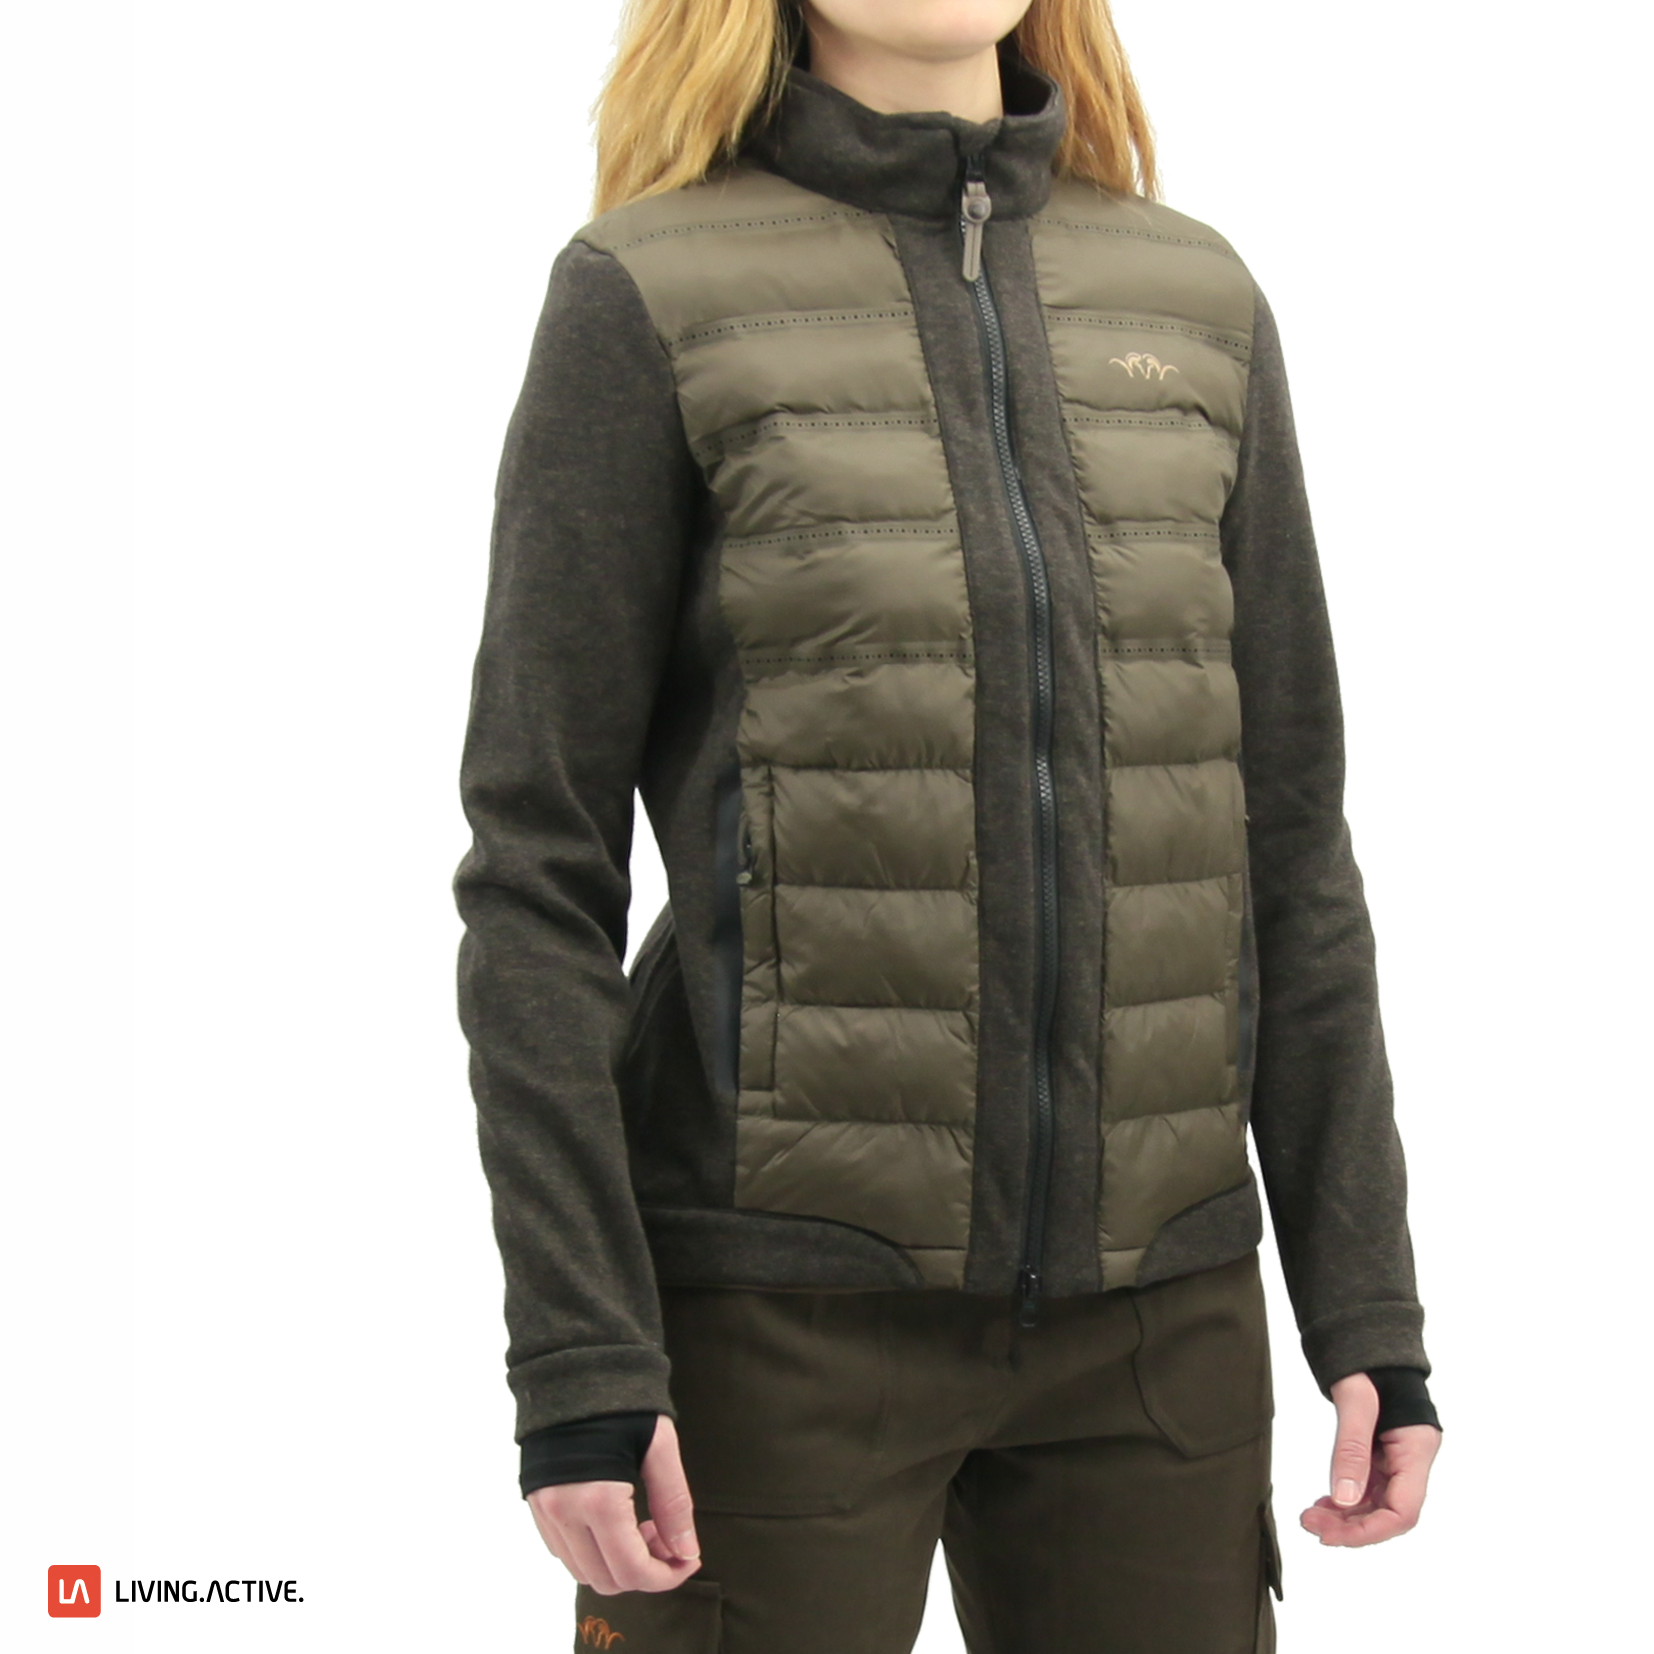 Blaser active outfits Komfort Jacke Damen online kaufen auf
livingactive.de